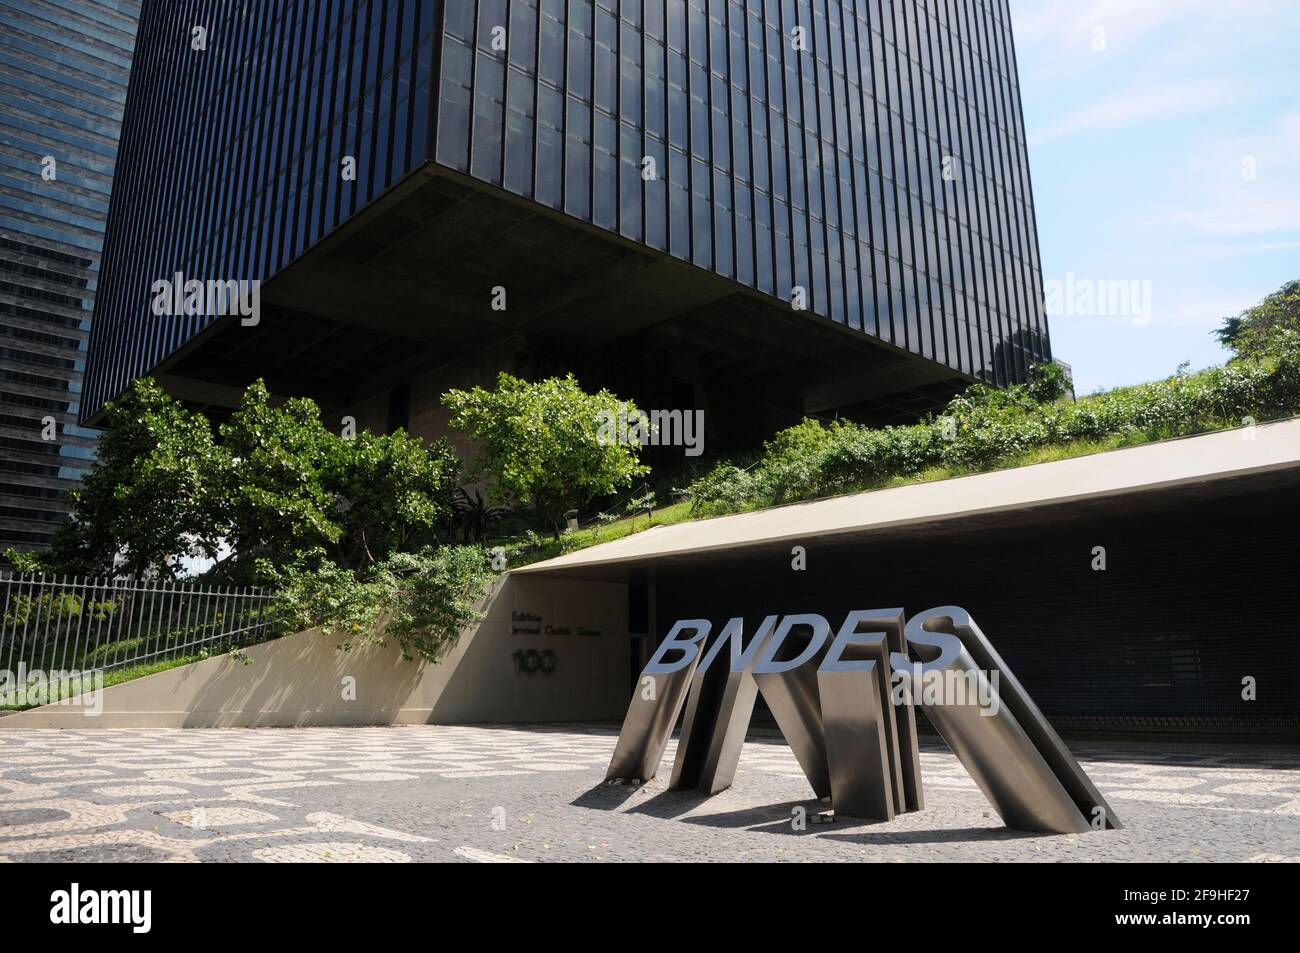 Rio de Janeiro, Brazil, April 15, 2020. BNDES (National Bank for Economic and Social Development) building located in the city center of Rio de Janeir Stock Photo